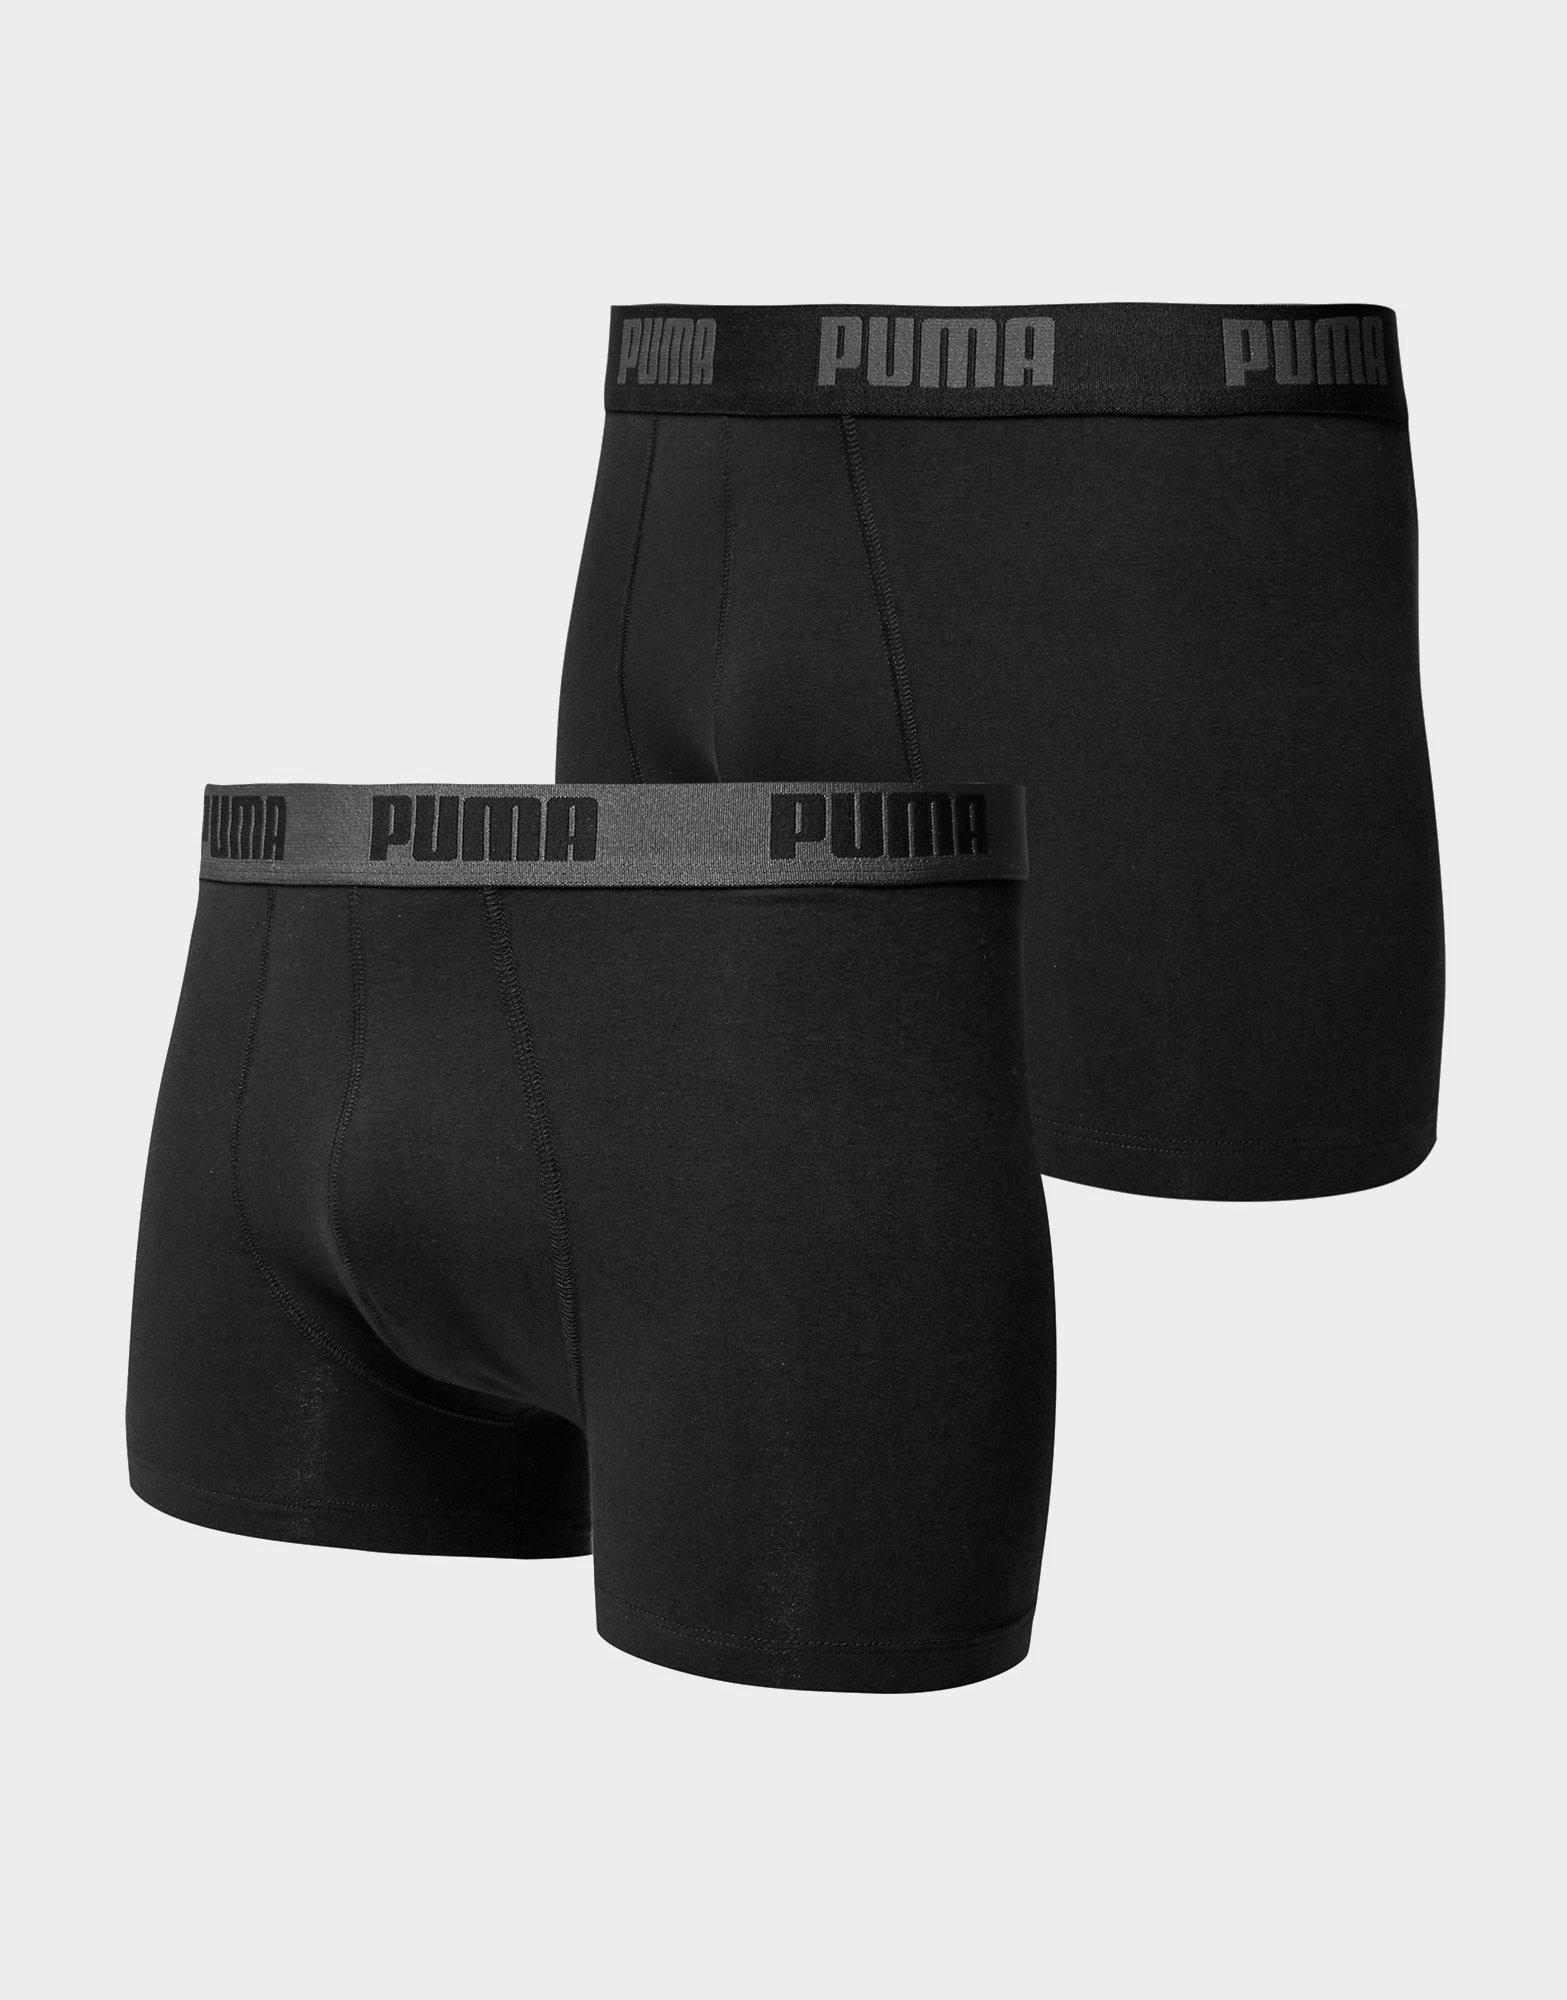 puma women's boxer shorts